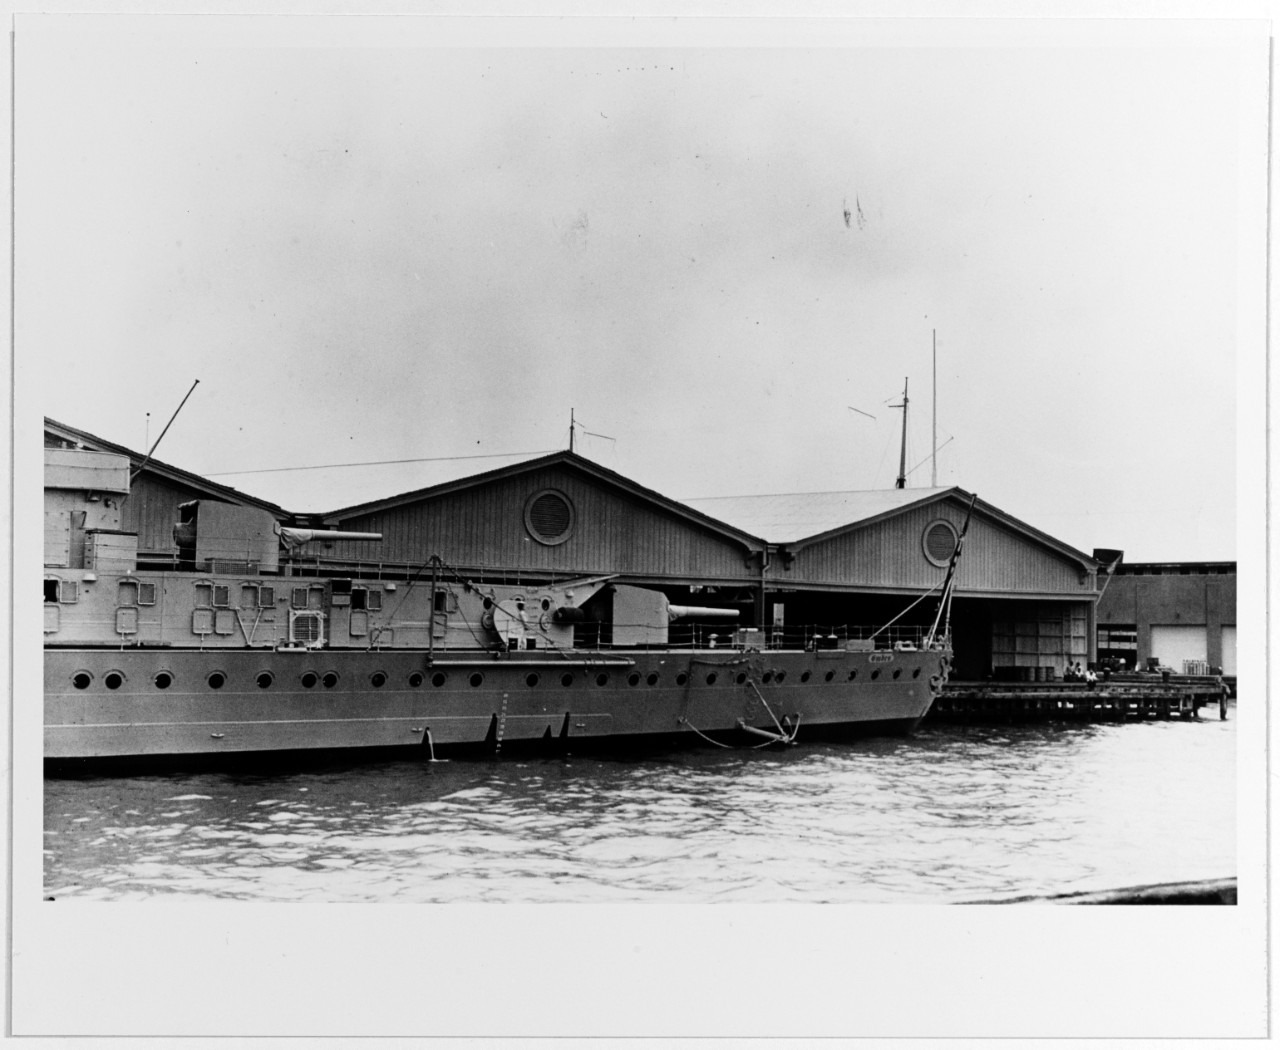 EMDEN (German light cruiser, 1925)